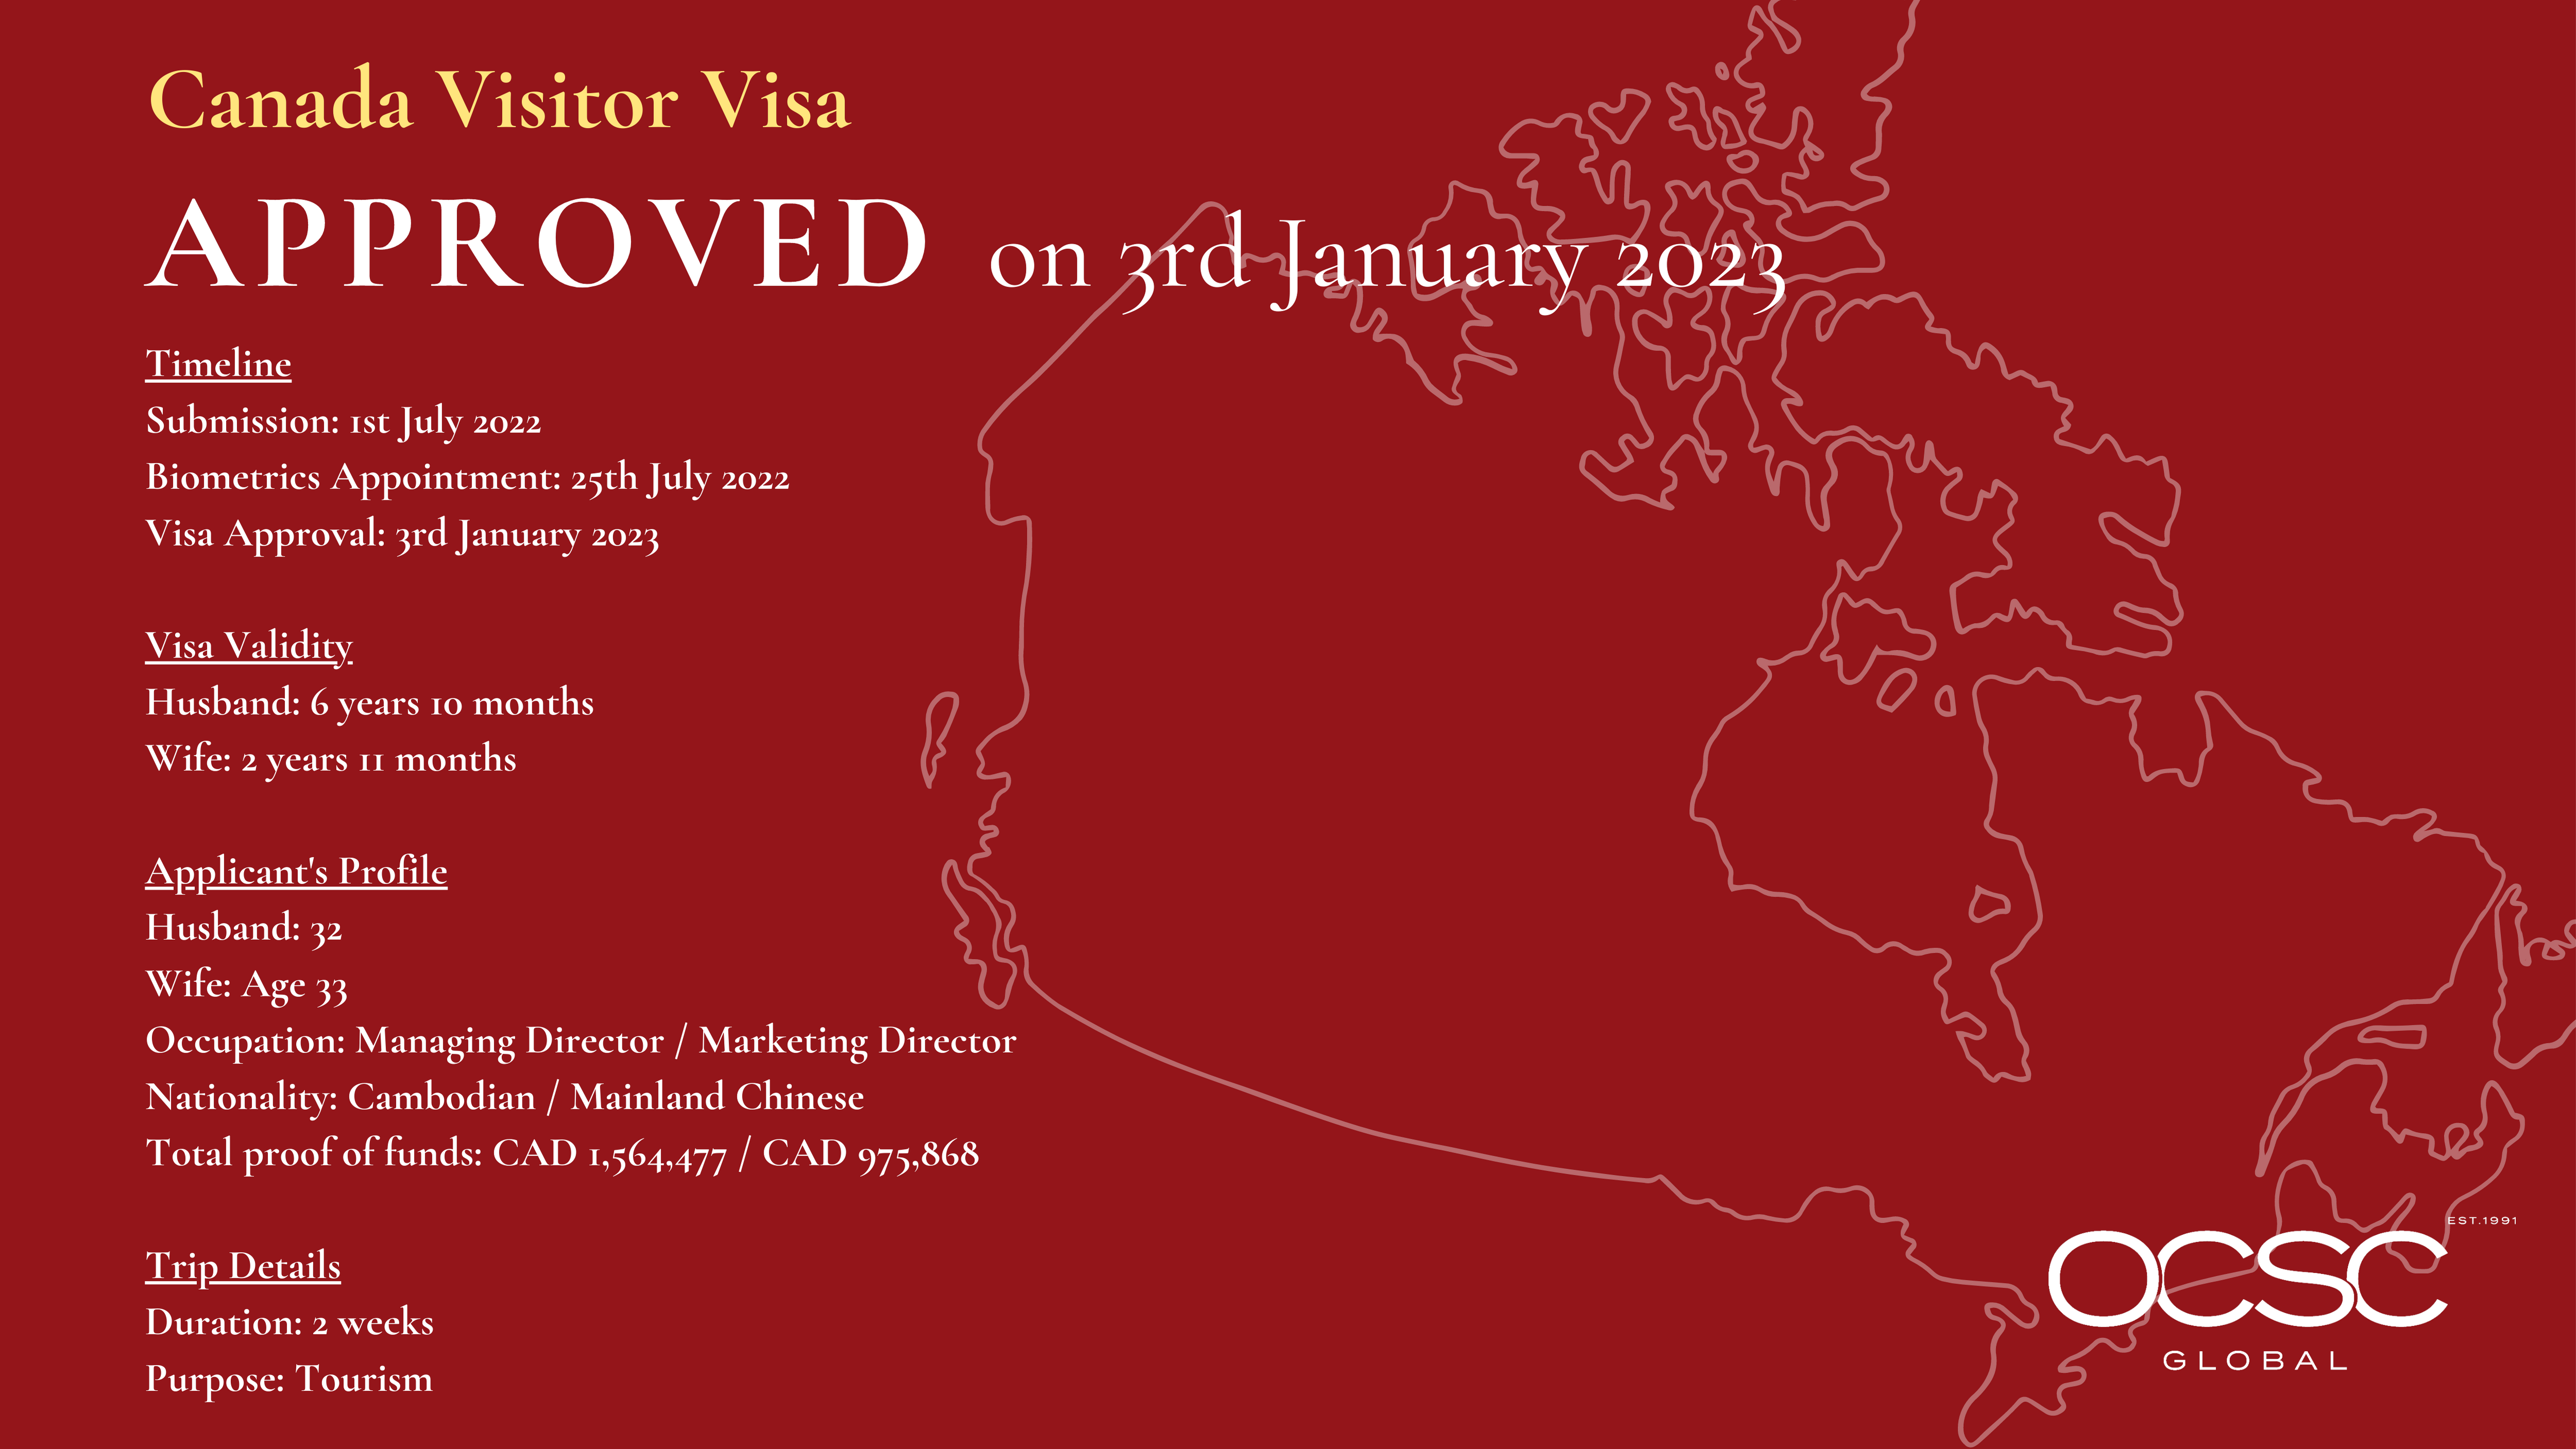 Canada Visitor Visa Approved 3-jan